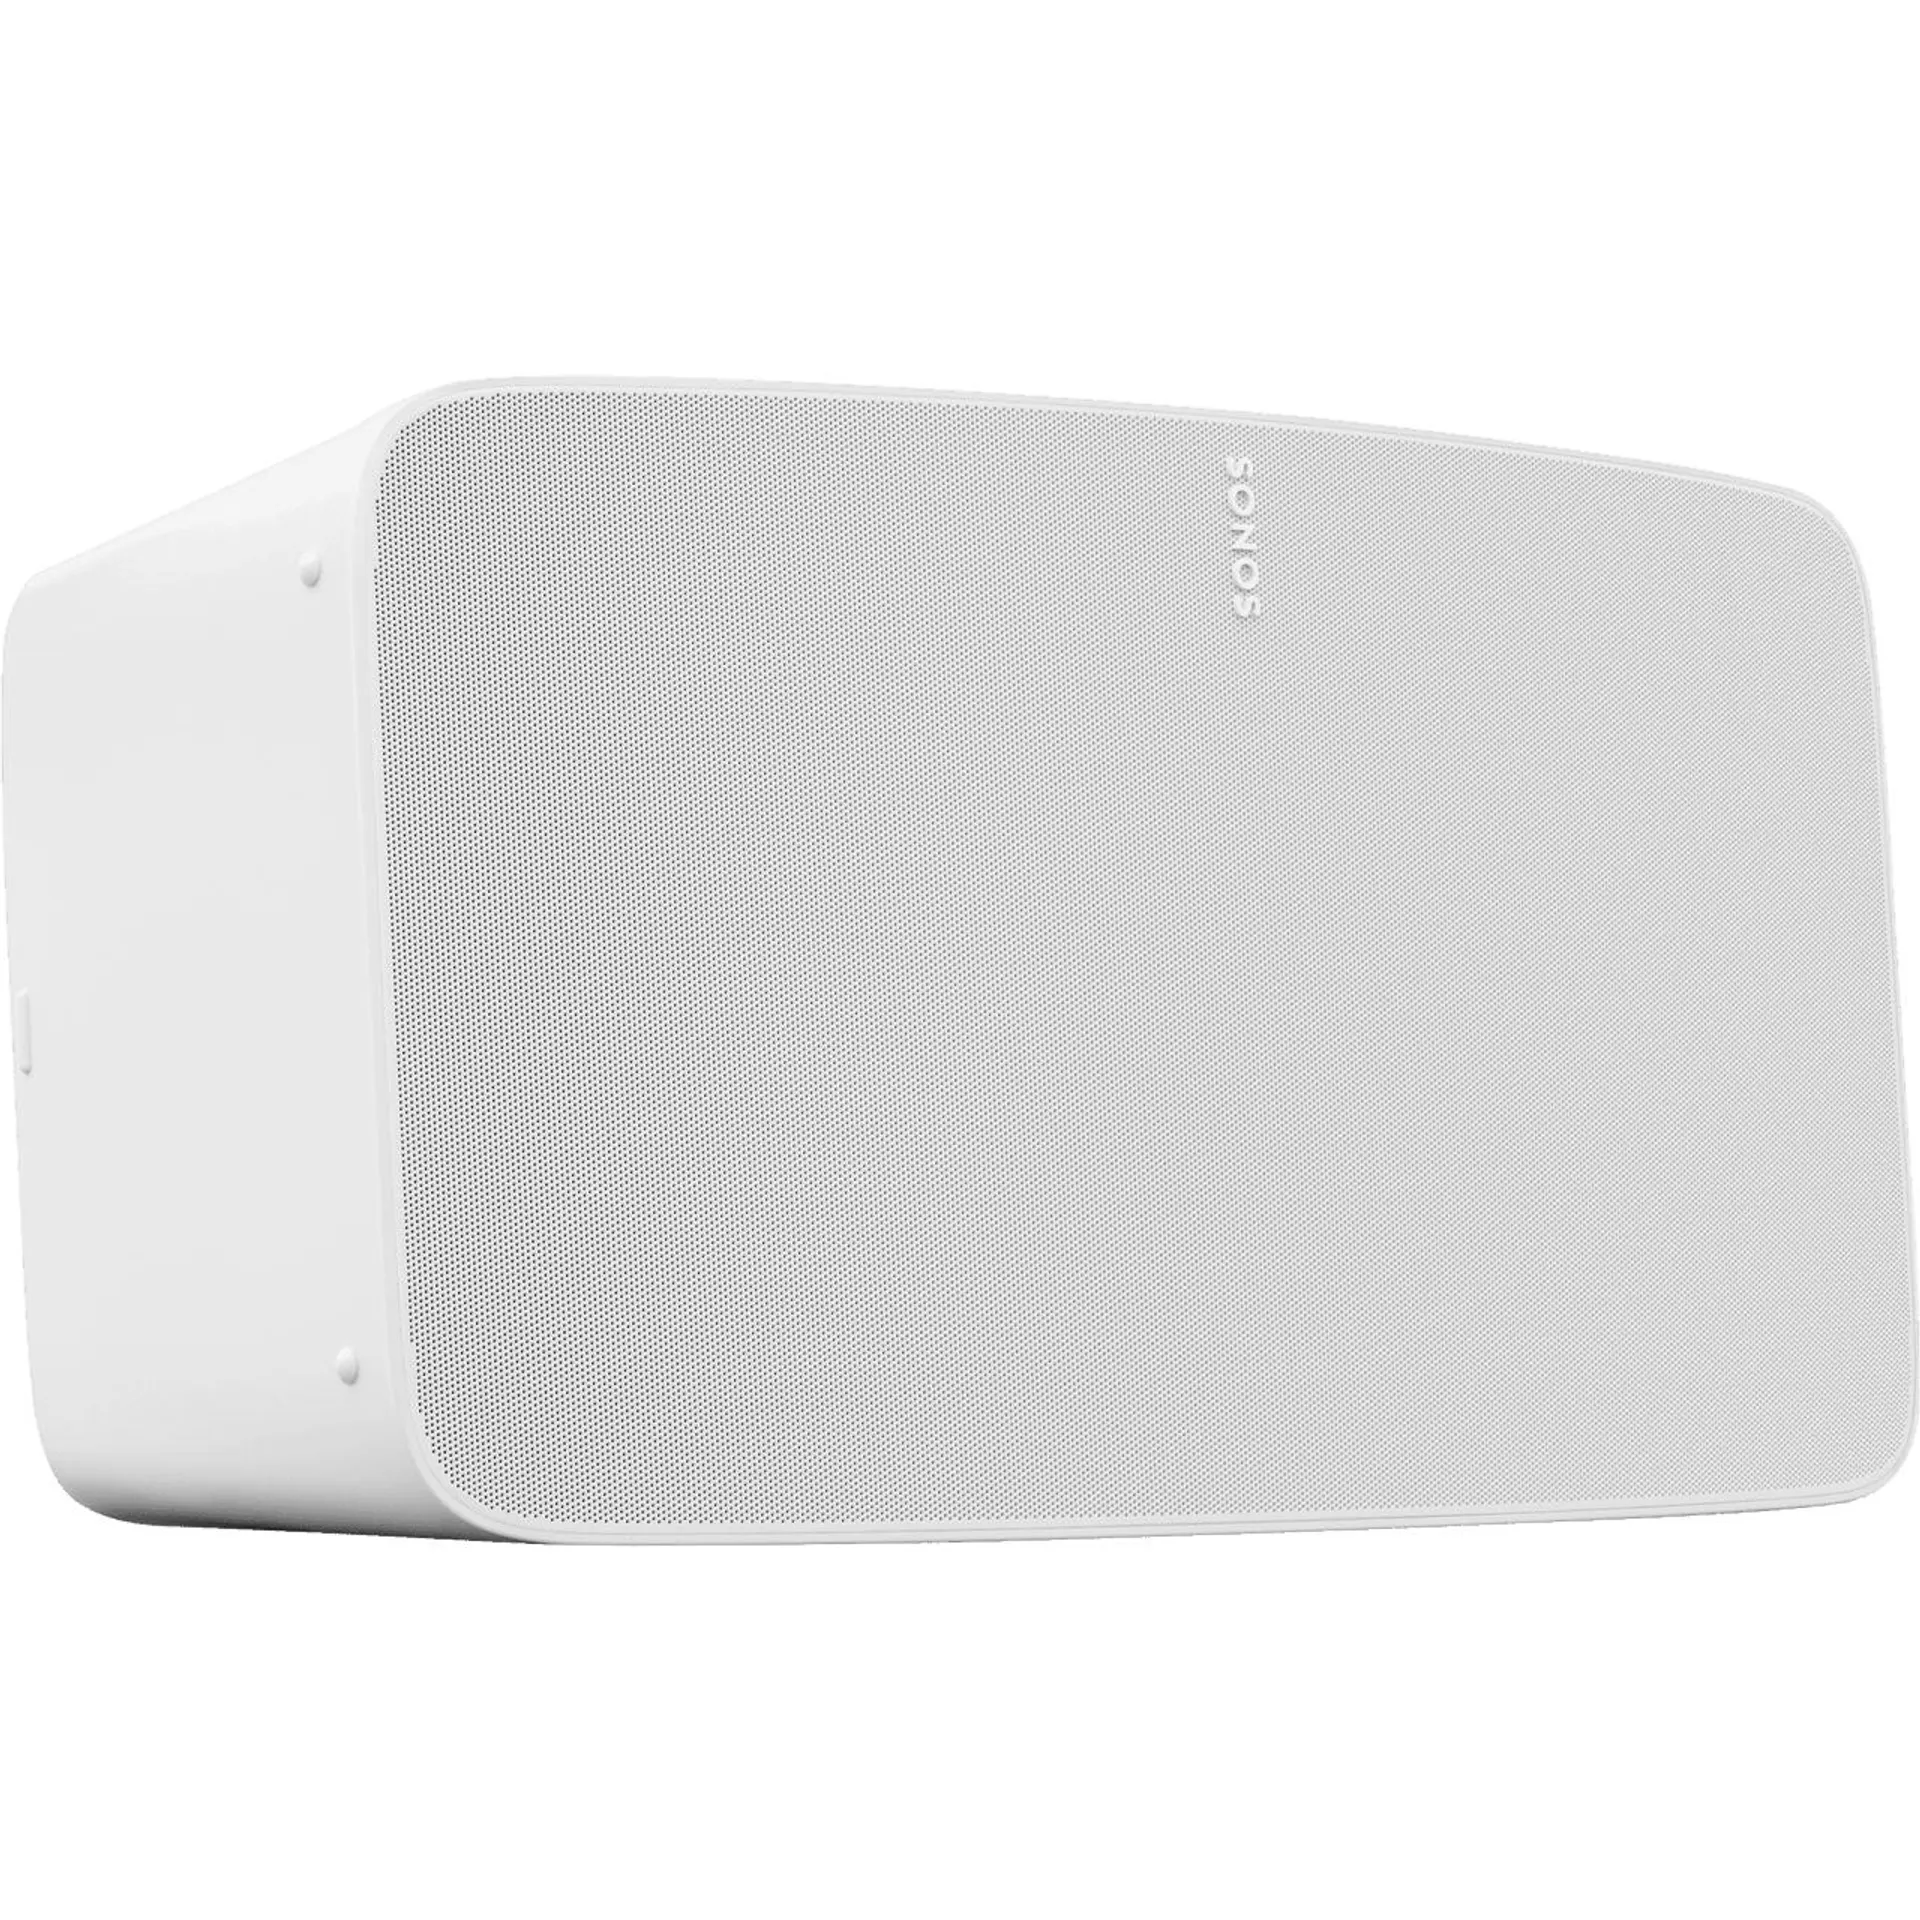 Sonos Five Multi Room Speaker - White